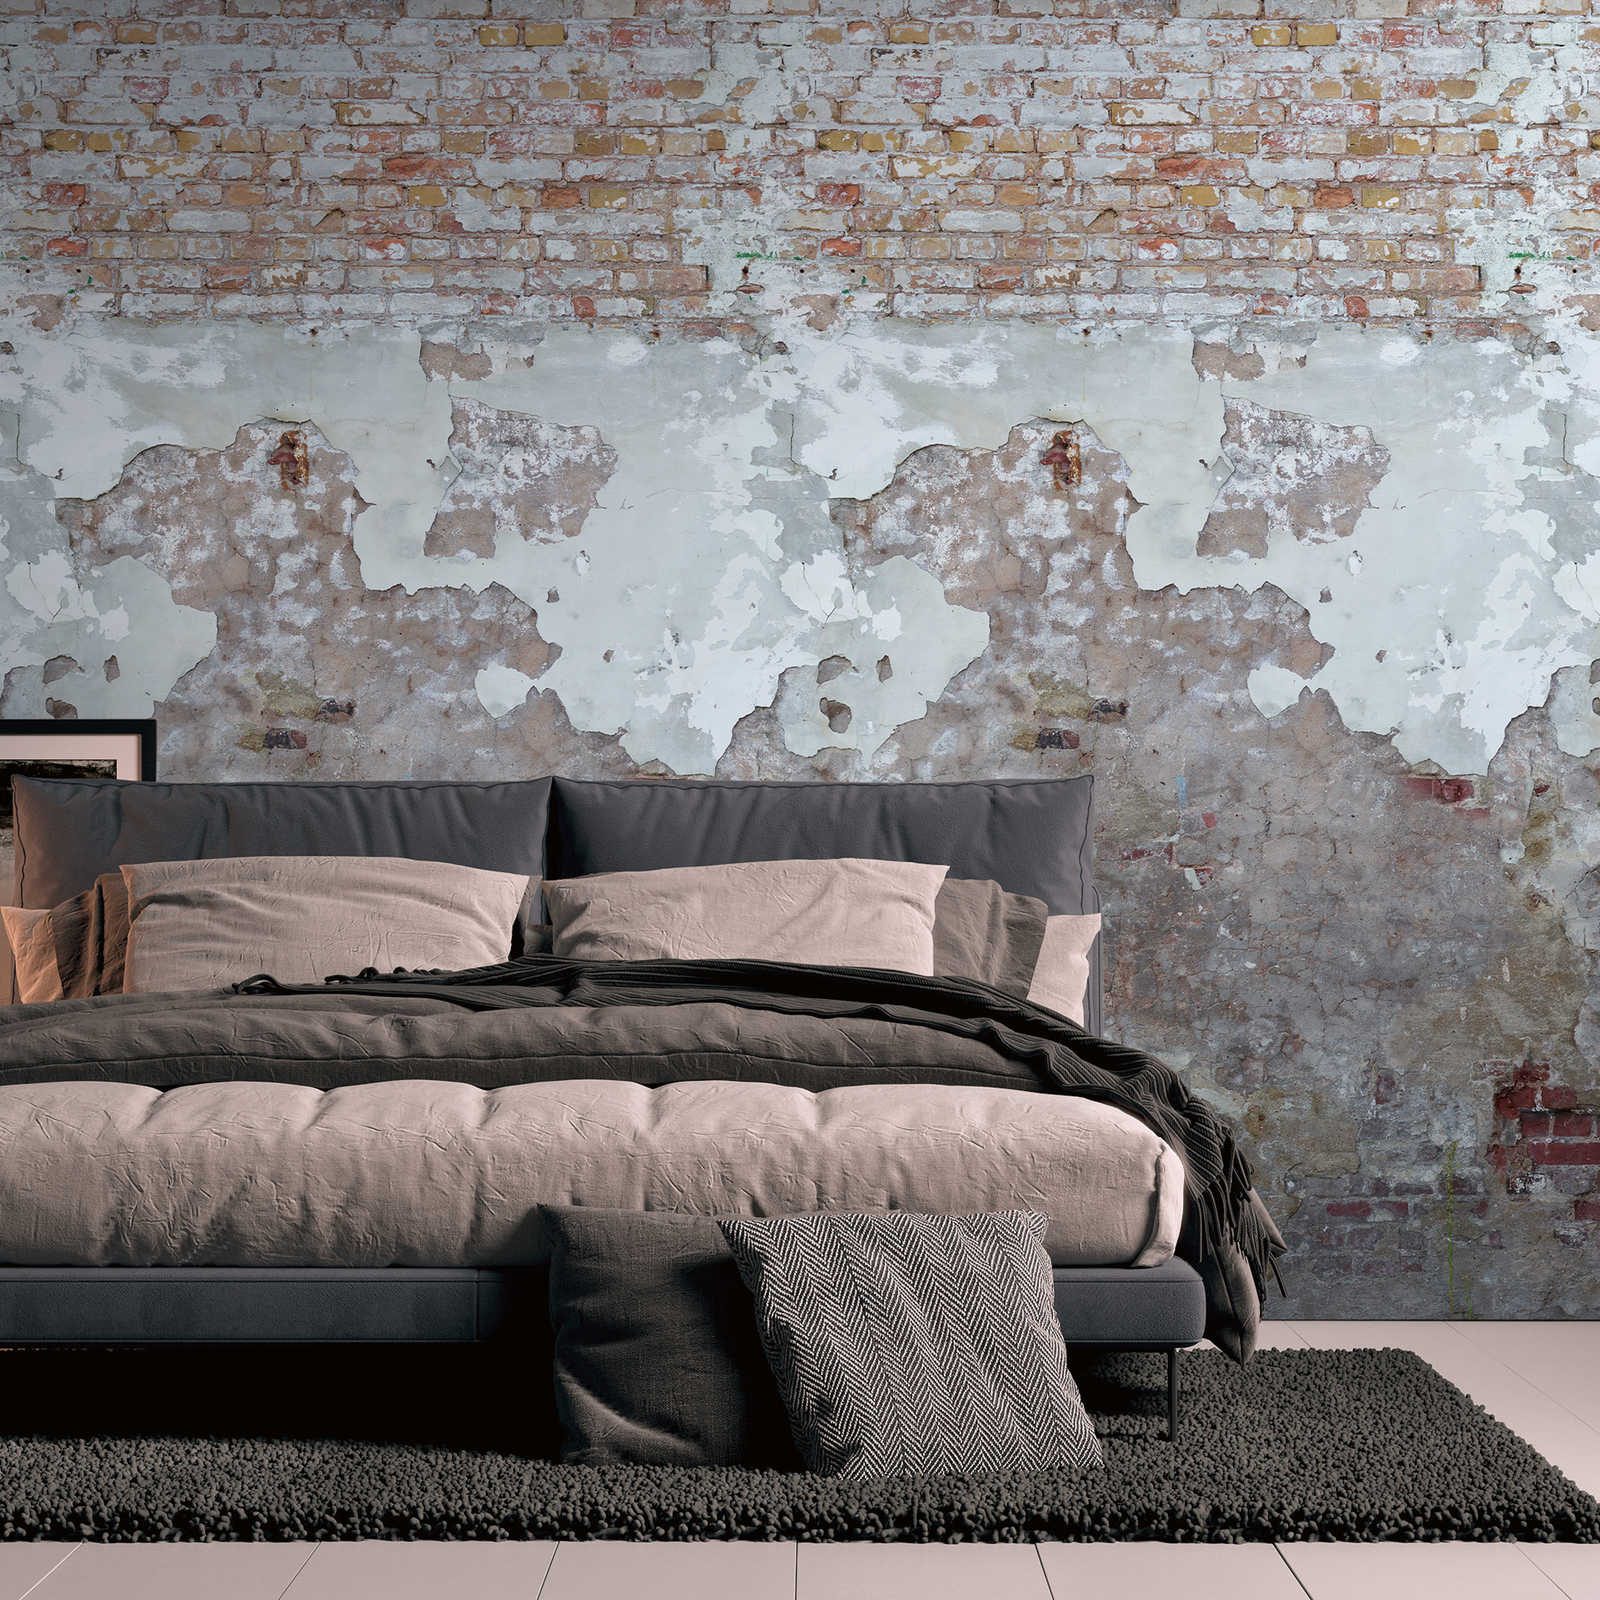 Stone wall effect wallpaper in used look - grey, beige, red
